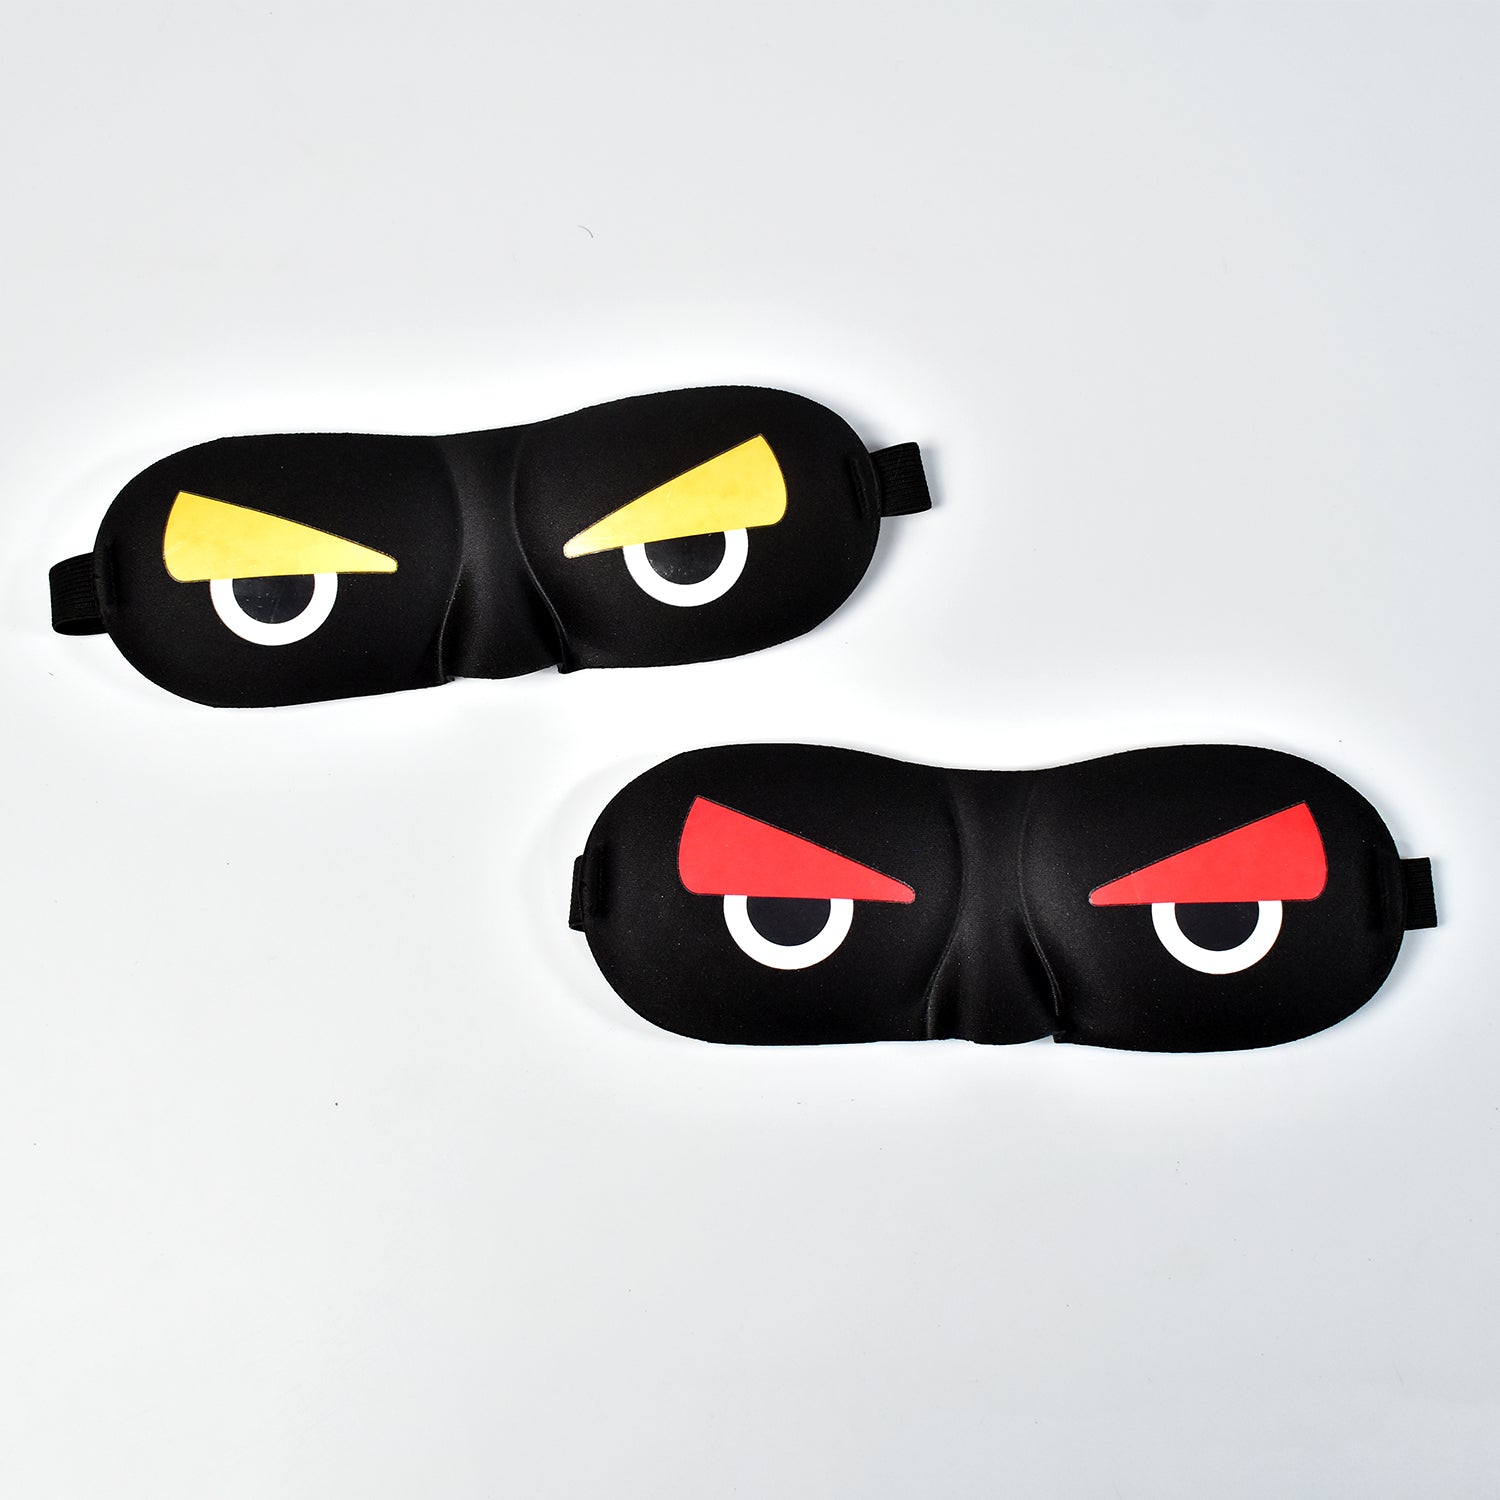 7817  Blind Sleeping Eye Mask Slip Night Sleep Eye black 3D Cotton Cover Super Soft & Smooth Travel Masks for Men Women Girls Boys Kids DeoDap